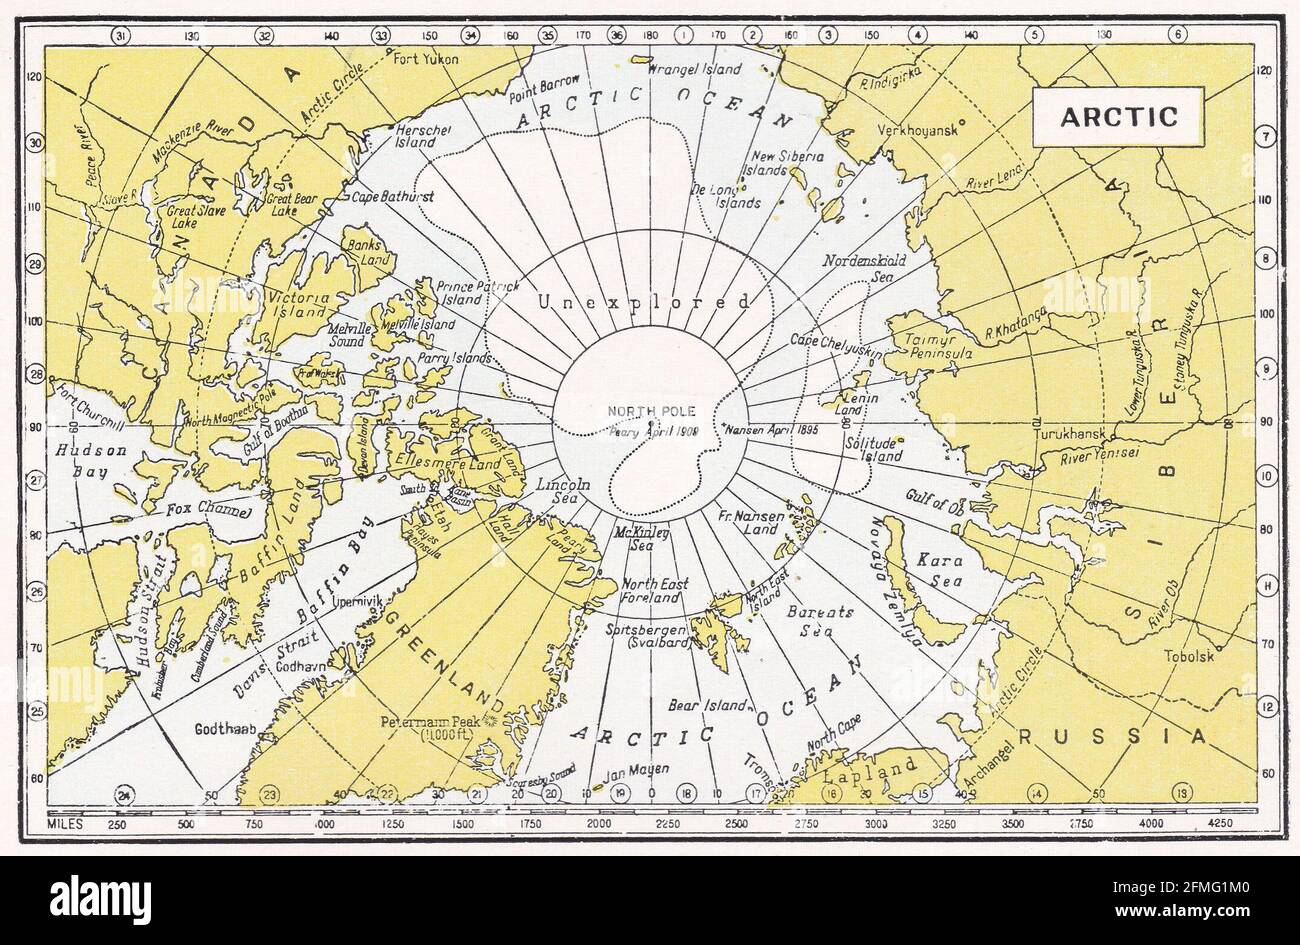 Vintage map of The Arctic - Unexplored 1930s. Stock Photo